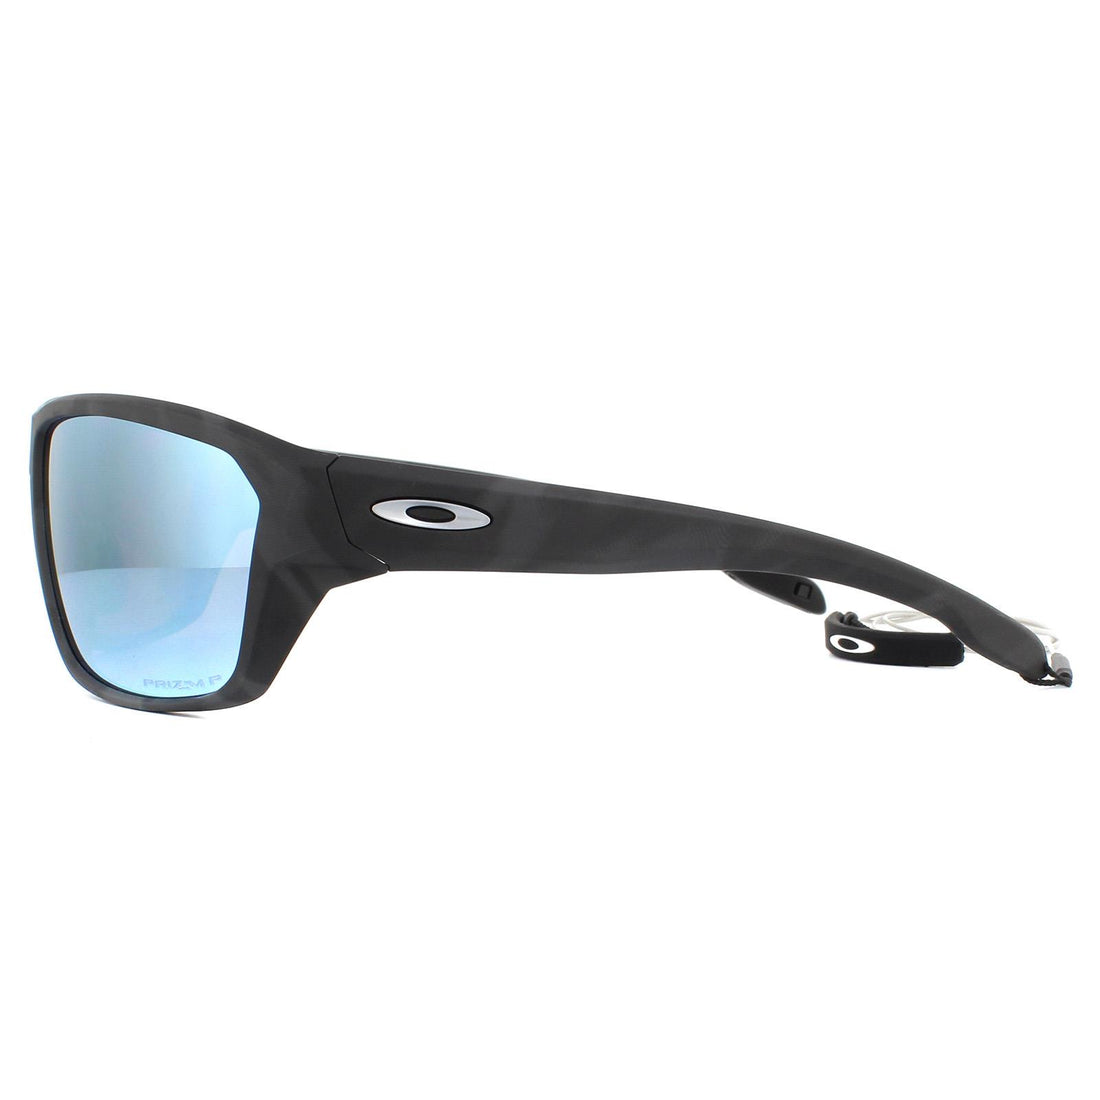 Oakley Split Shot sunglasses review - Yachting World